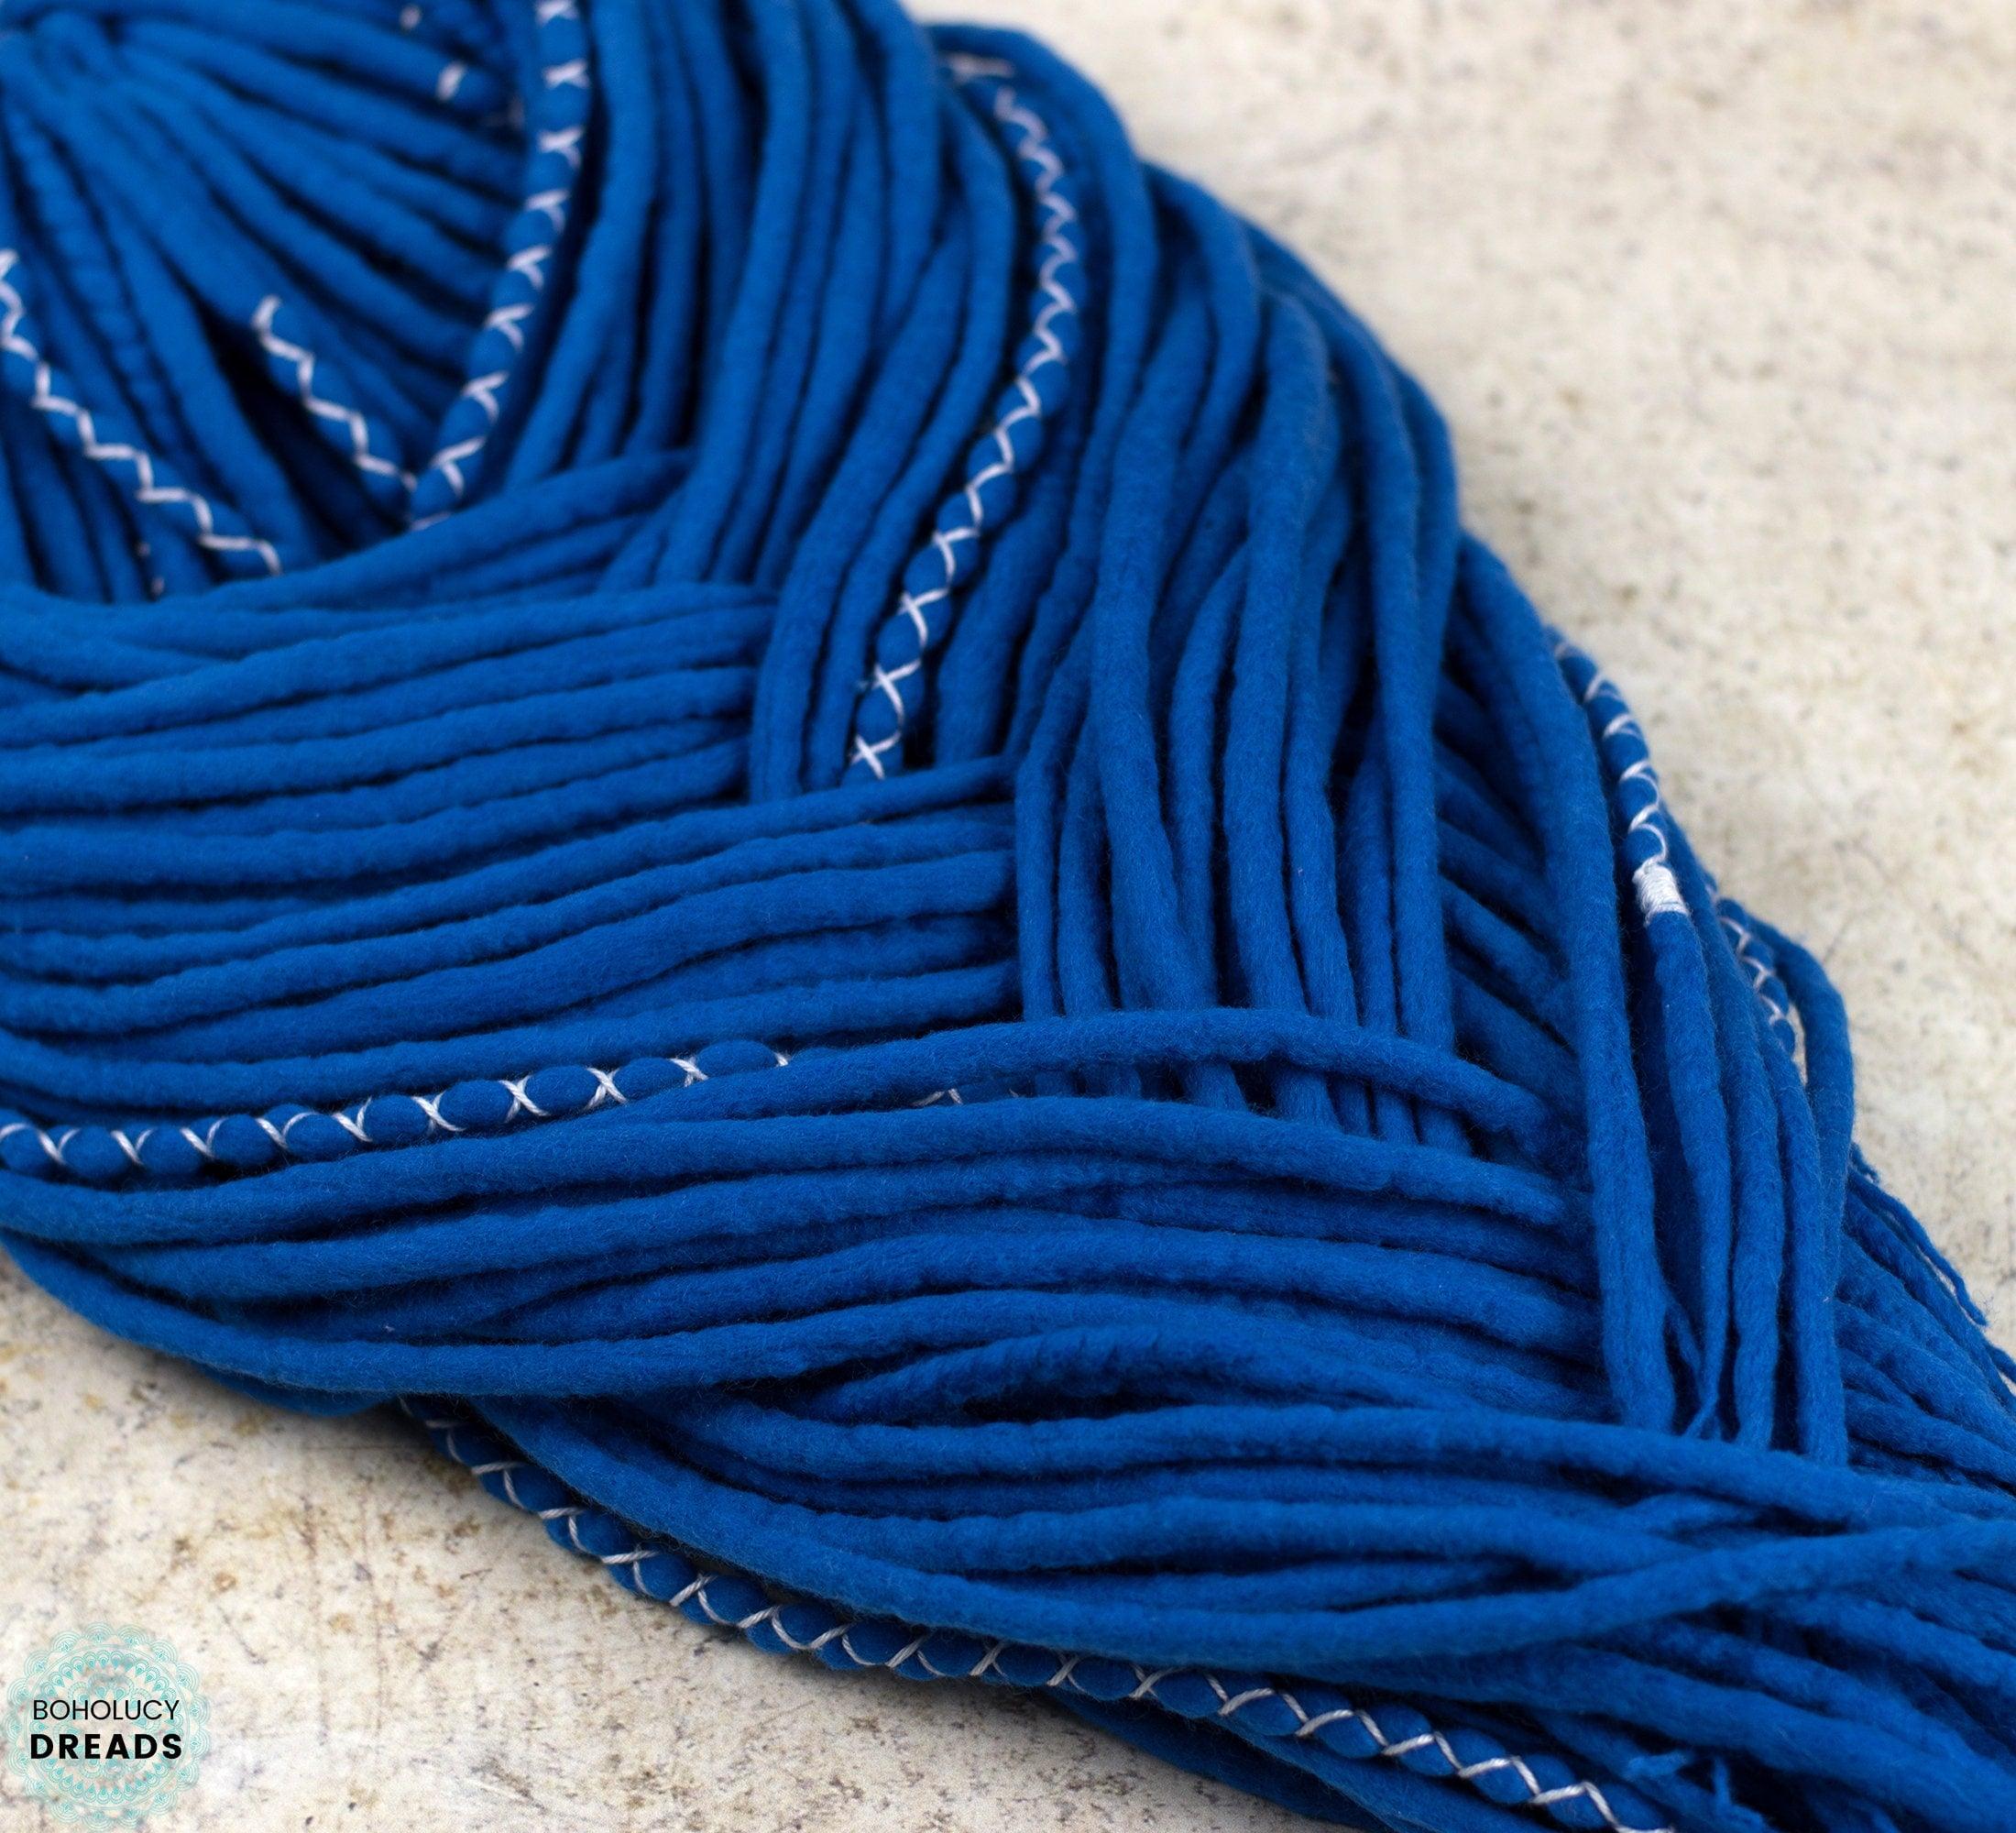 Royal blue merino wool dreadlocks